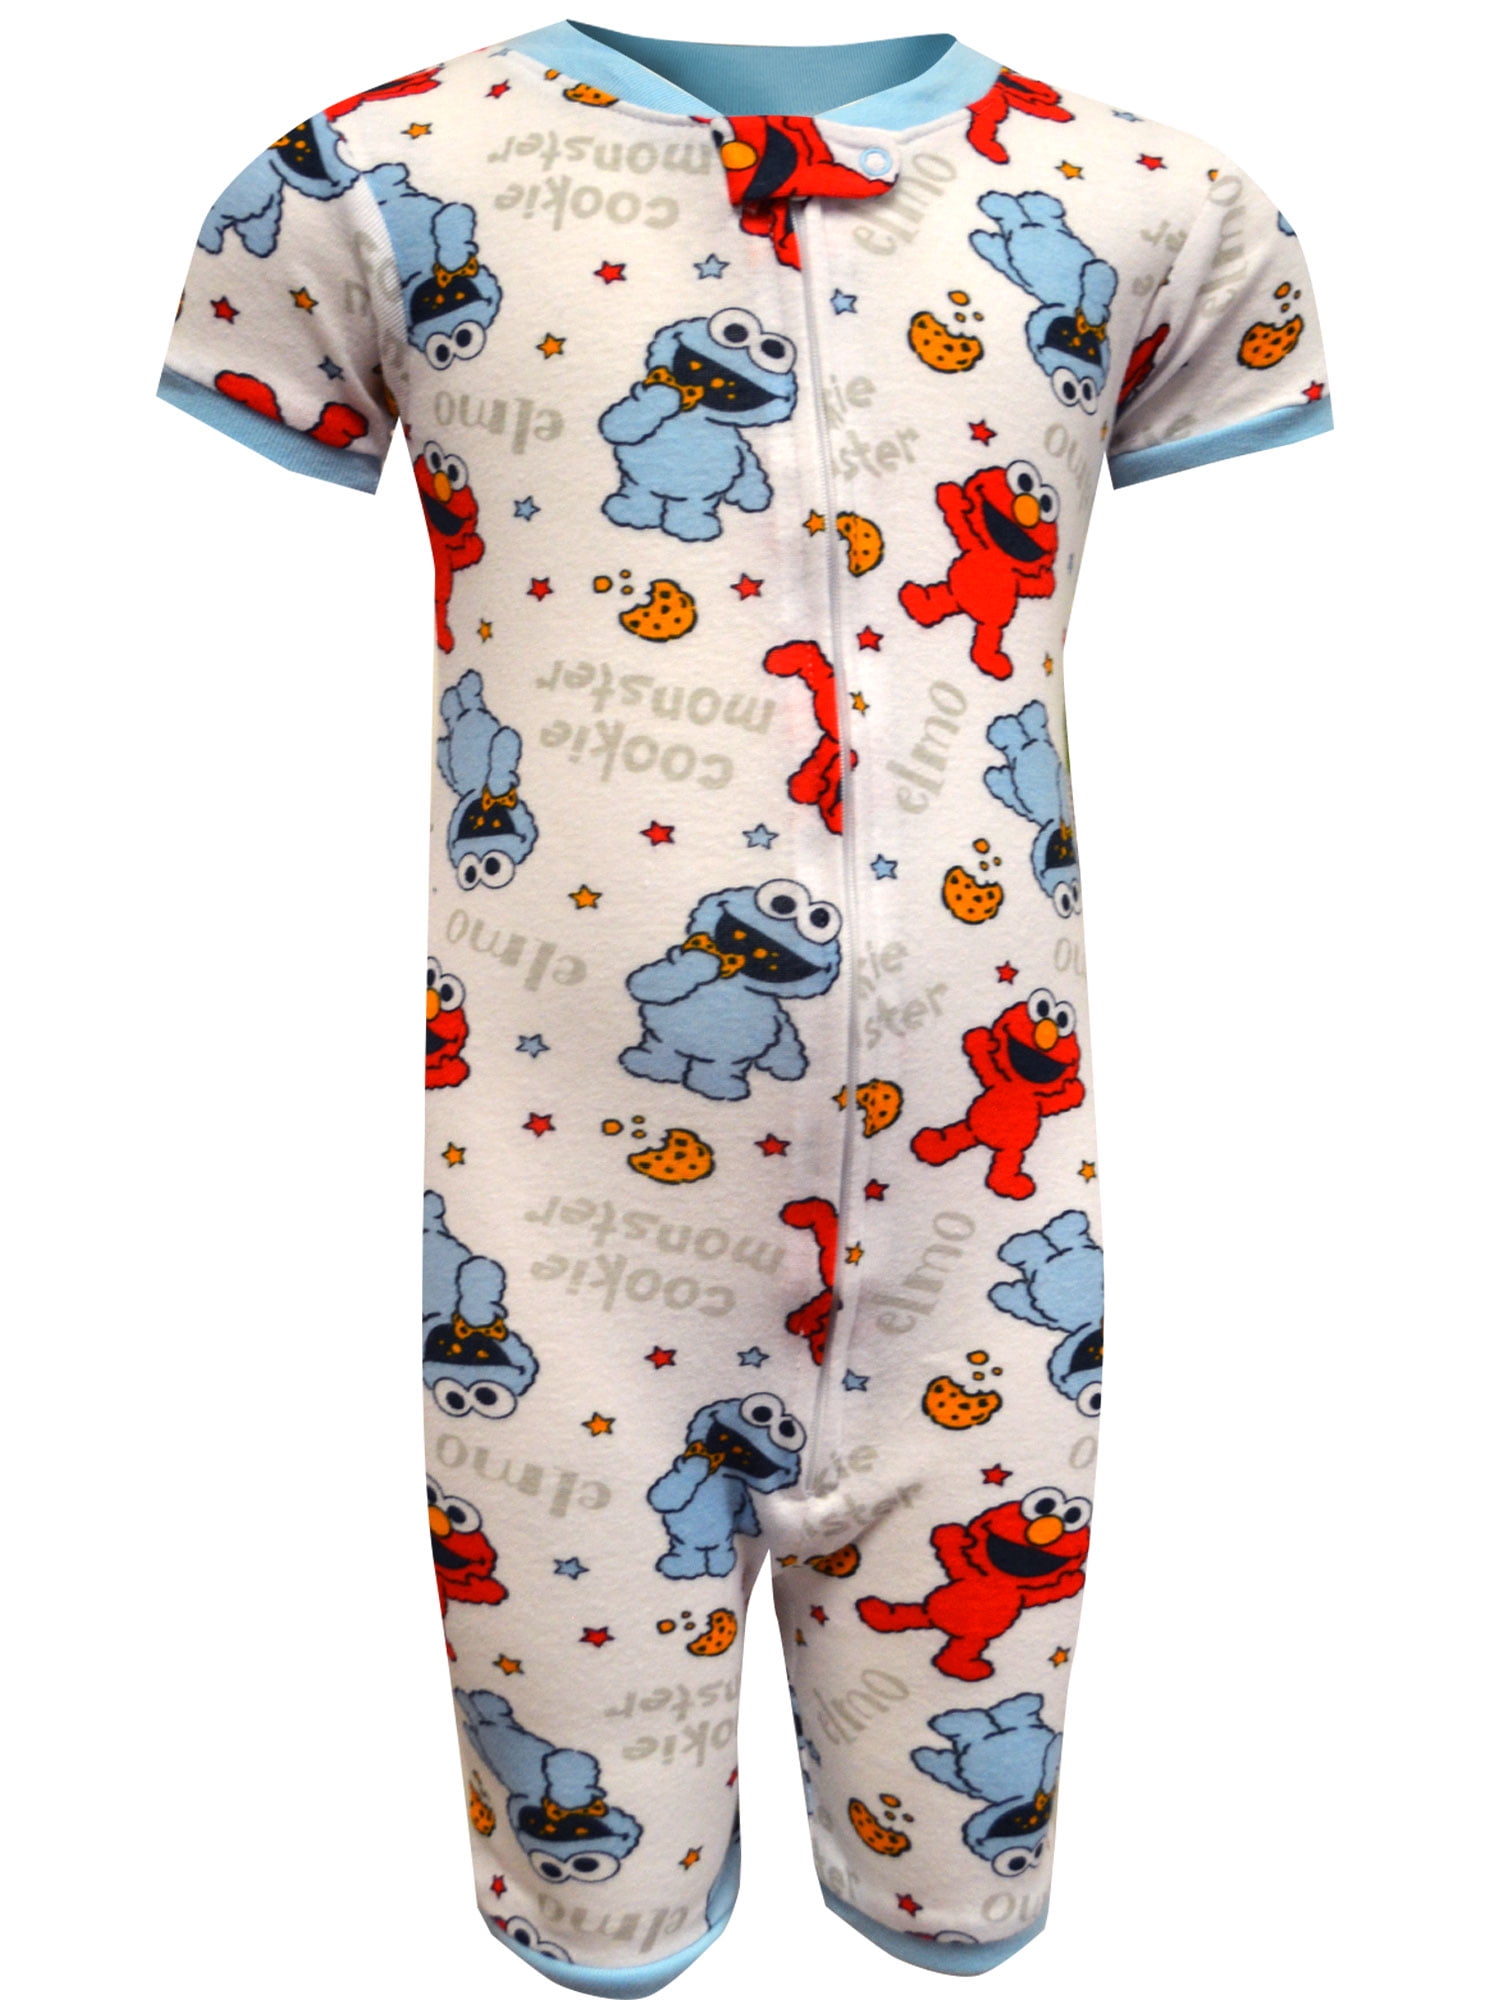 AME Sleepwear Sesame Monster Cotton Infant Boys Onesie Pajamas 12 Month -